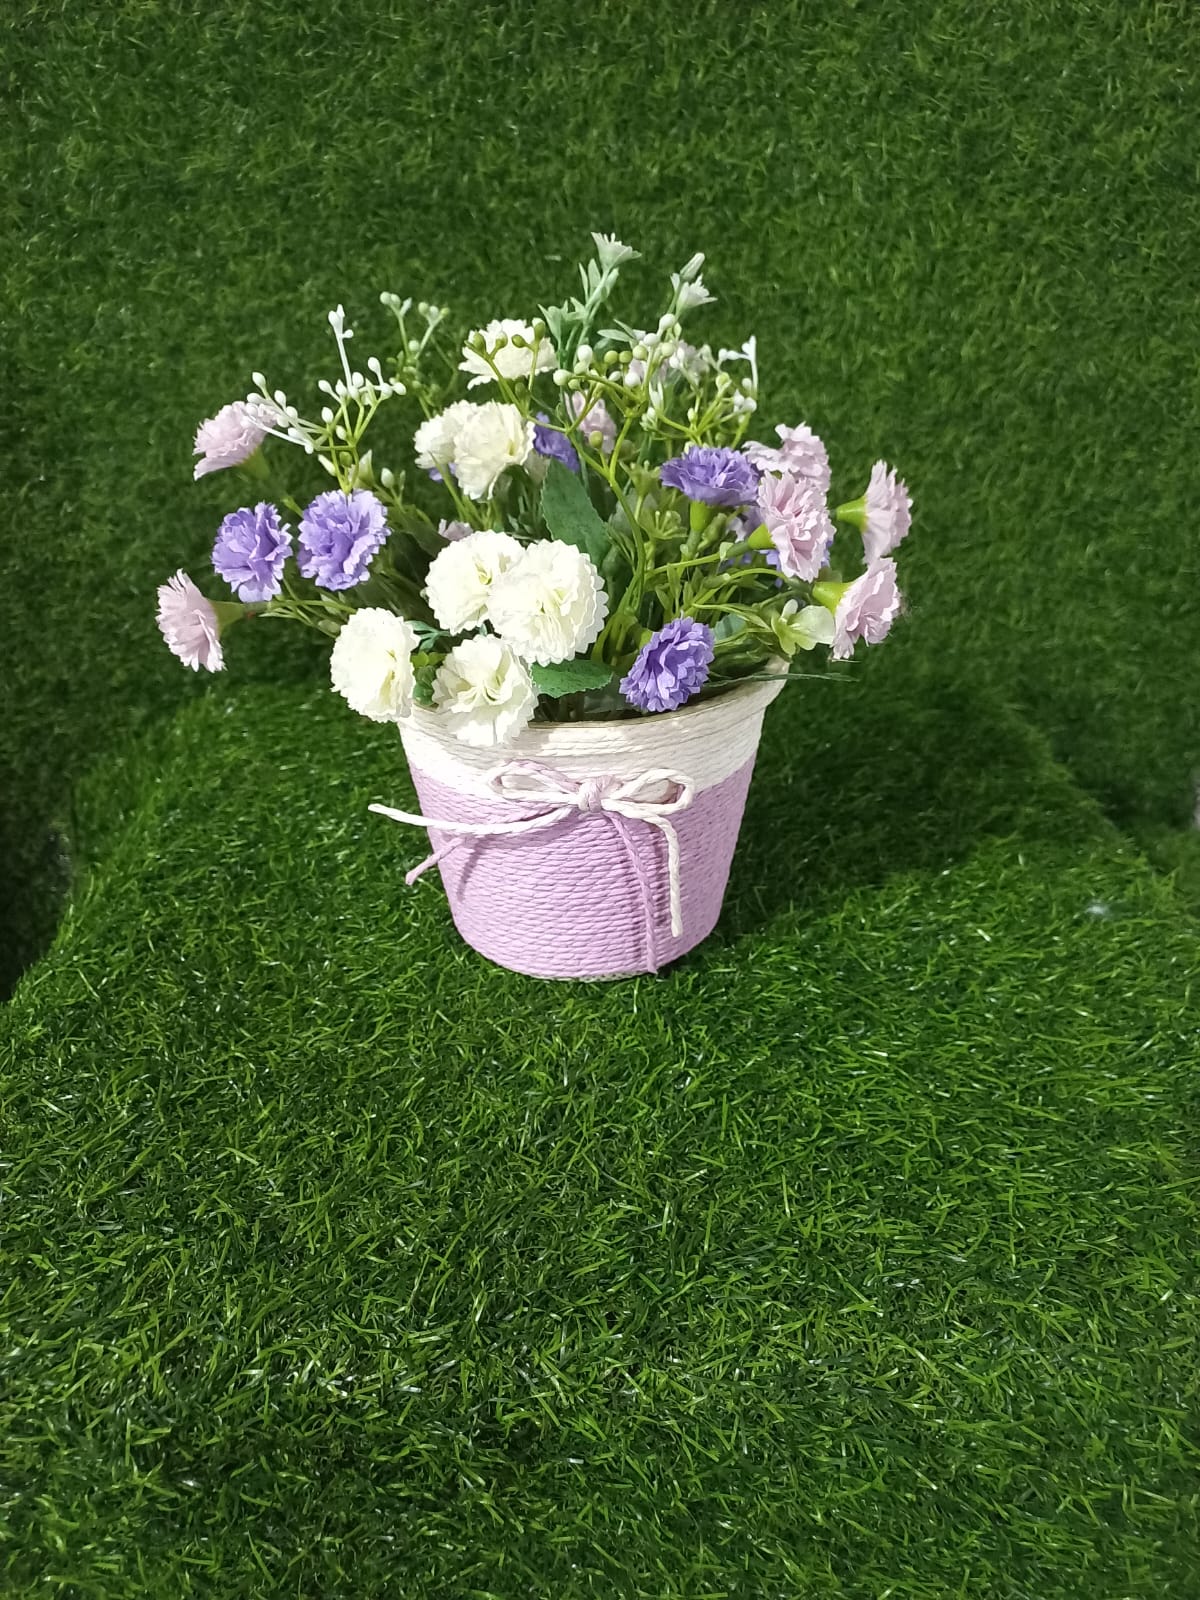 Purple Vase With Flowers